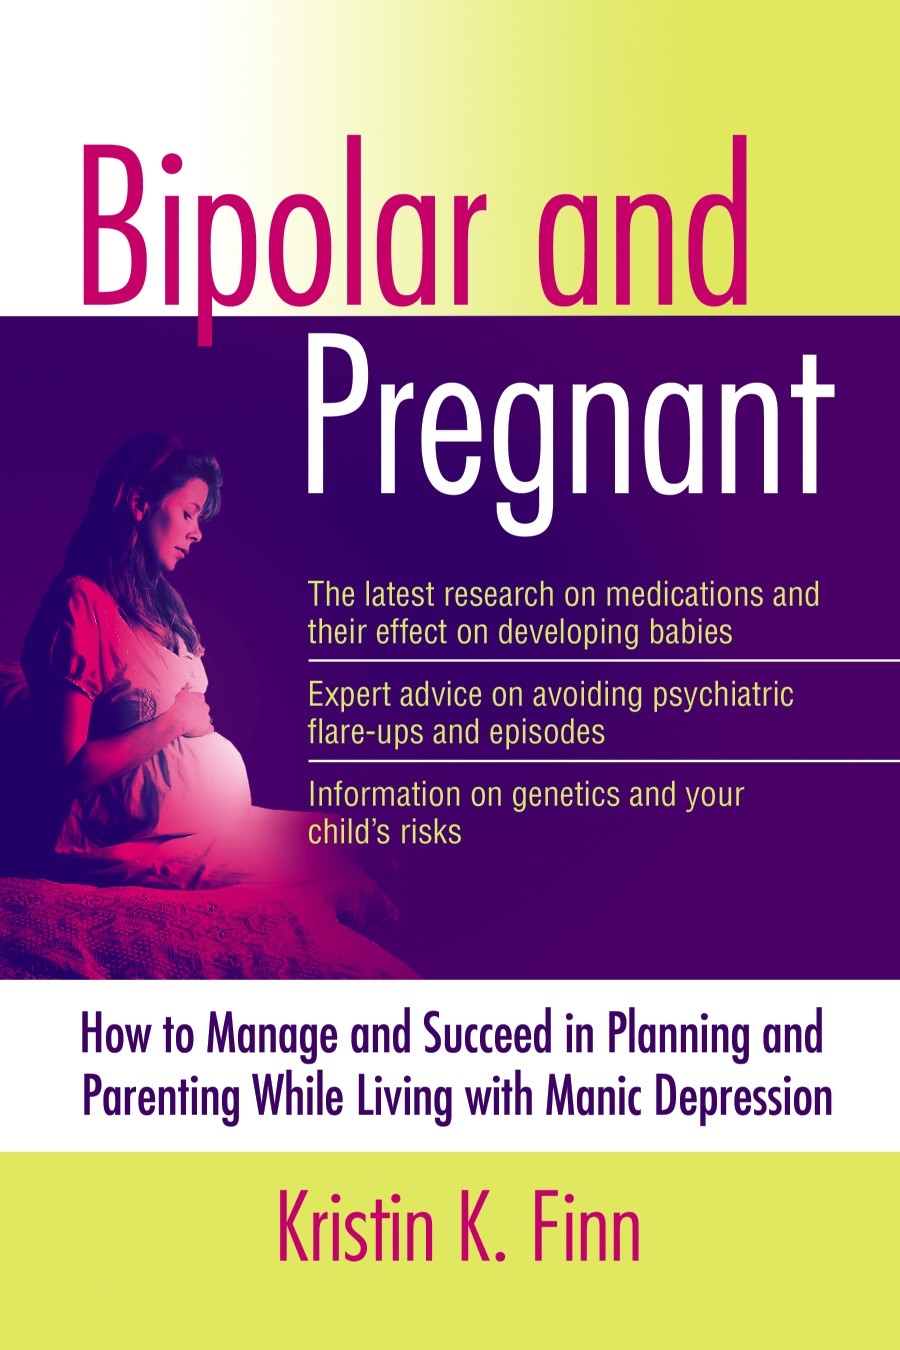 Bipolar and Pregnant